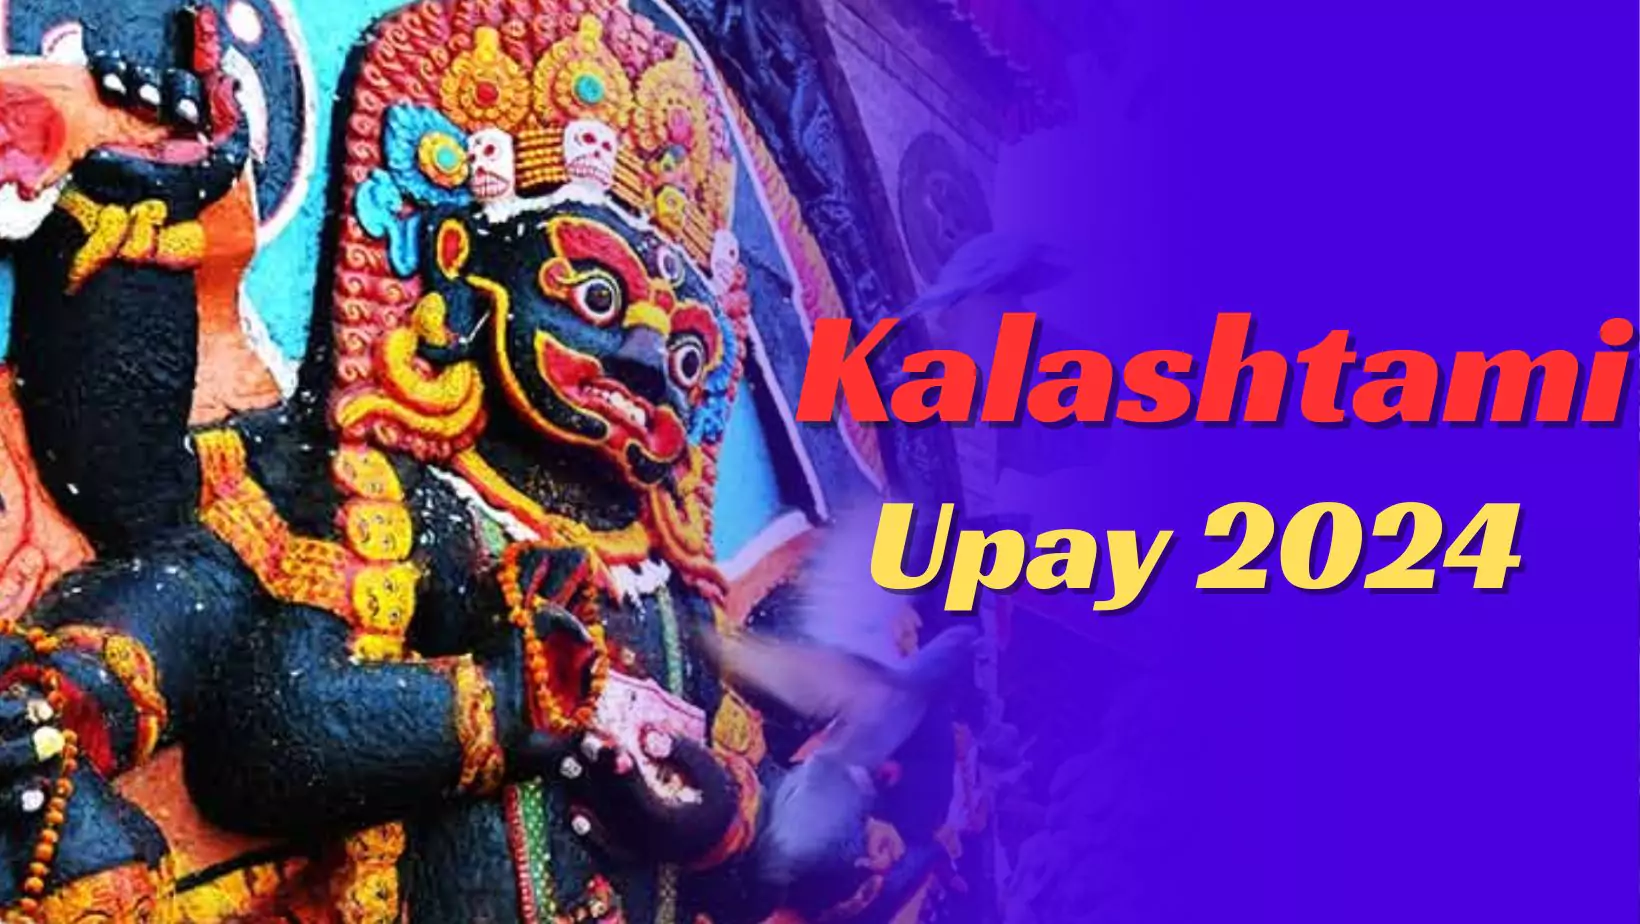 Kalashtami Upay